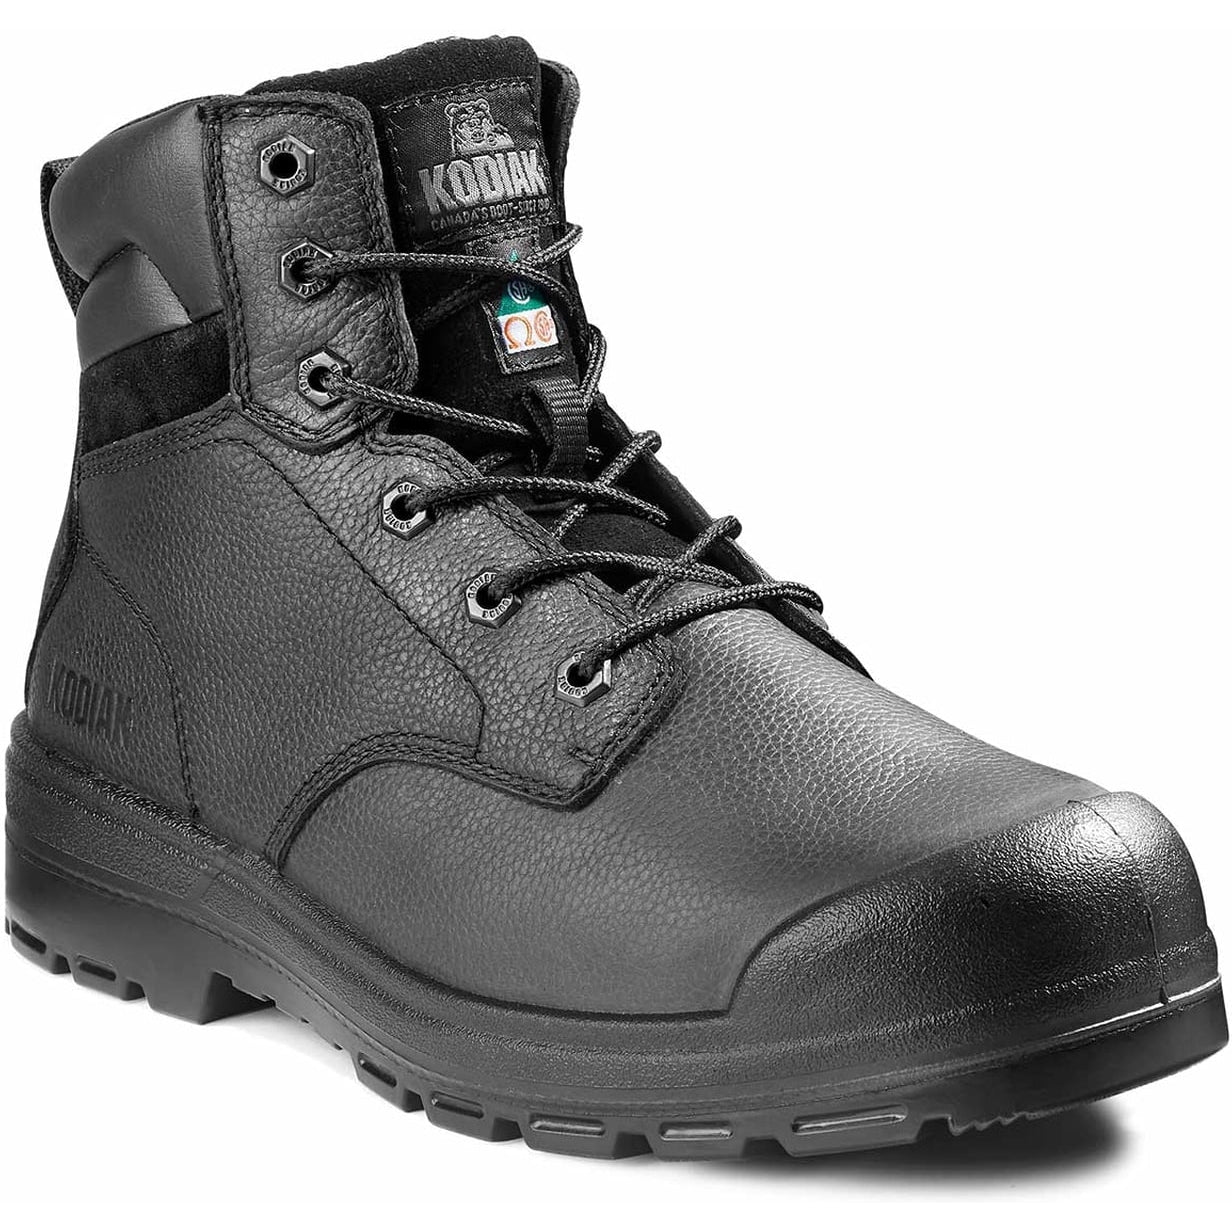 Kodiak Men's Greb 6" Steel Toe Safety Work Boot - Black - 4TH4BK 7 / Wide / Black - Overlook Boots